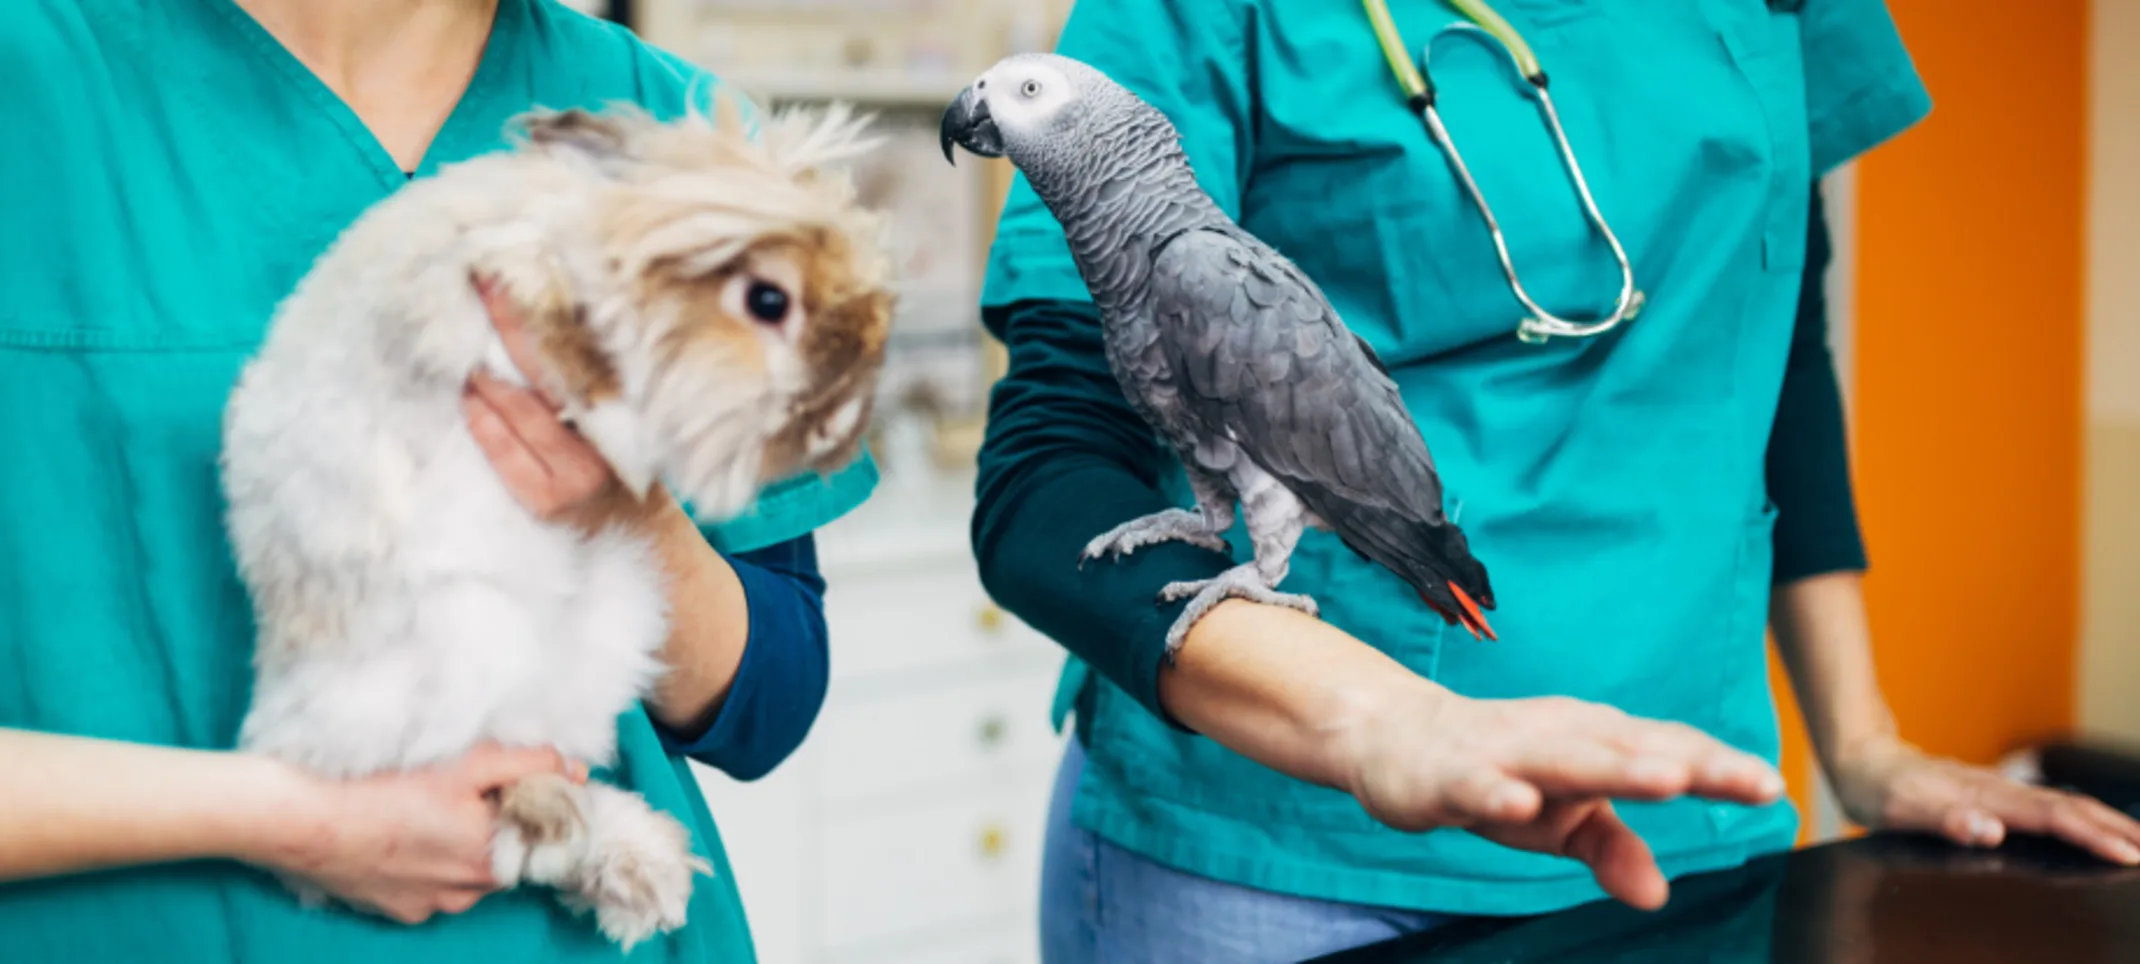 Veterinarians Holding a Rabbit and Bird